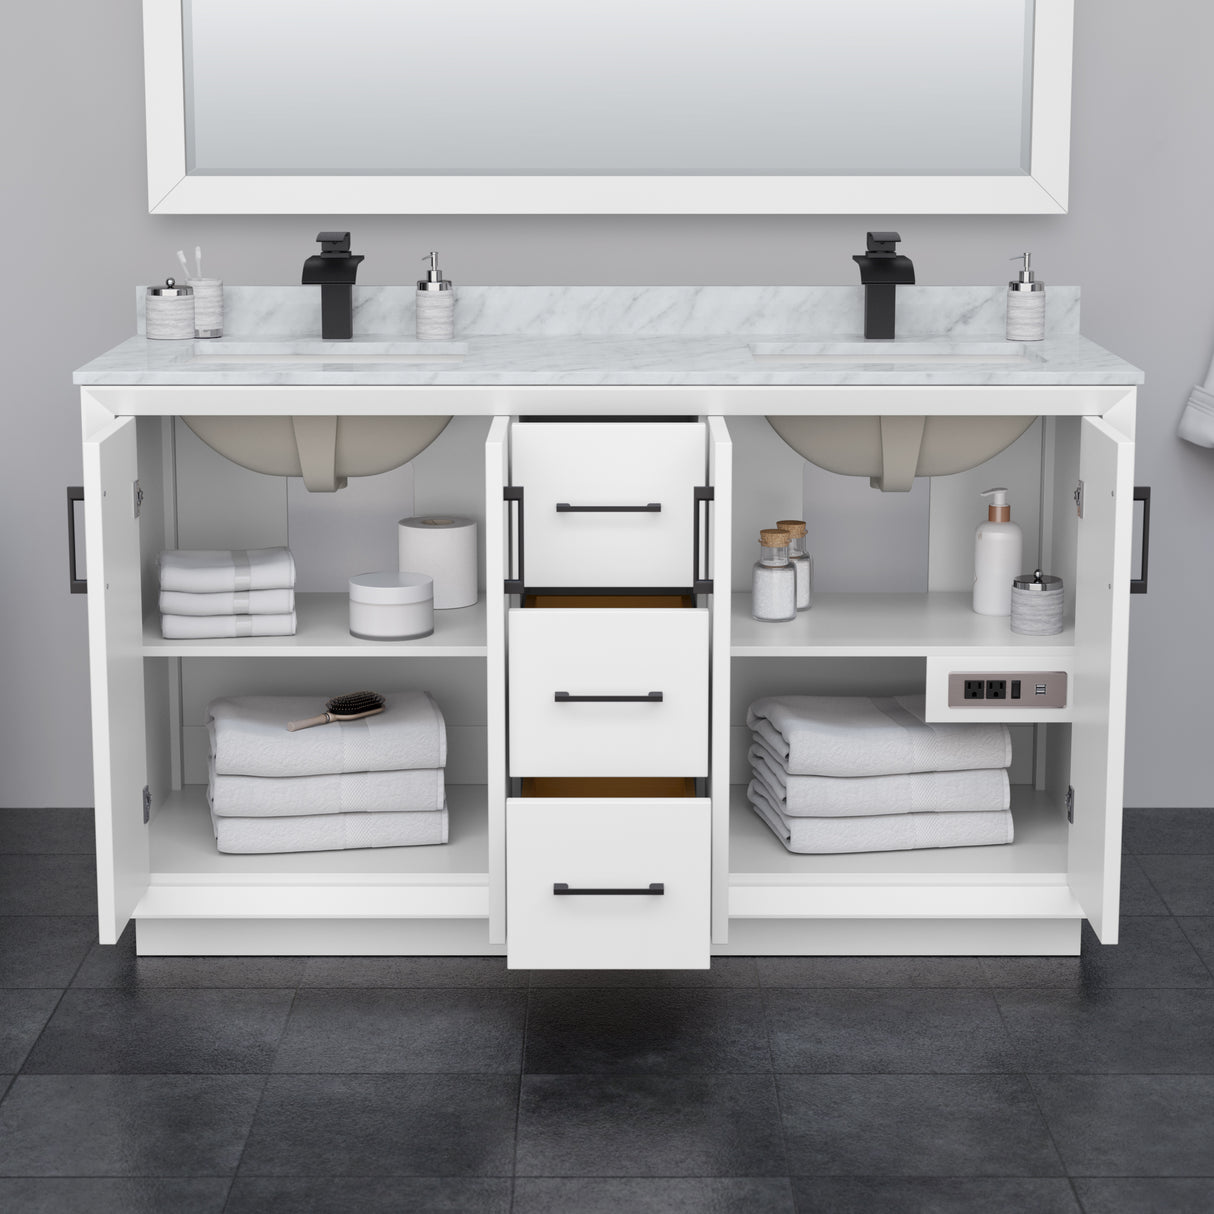 Strada 60 Inch Double Bathroom Vanity in White White Carrara Marble Countertop Undermount Square Sink Matte Black Trim 58 Inch Mirror